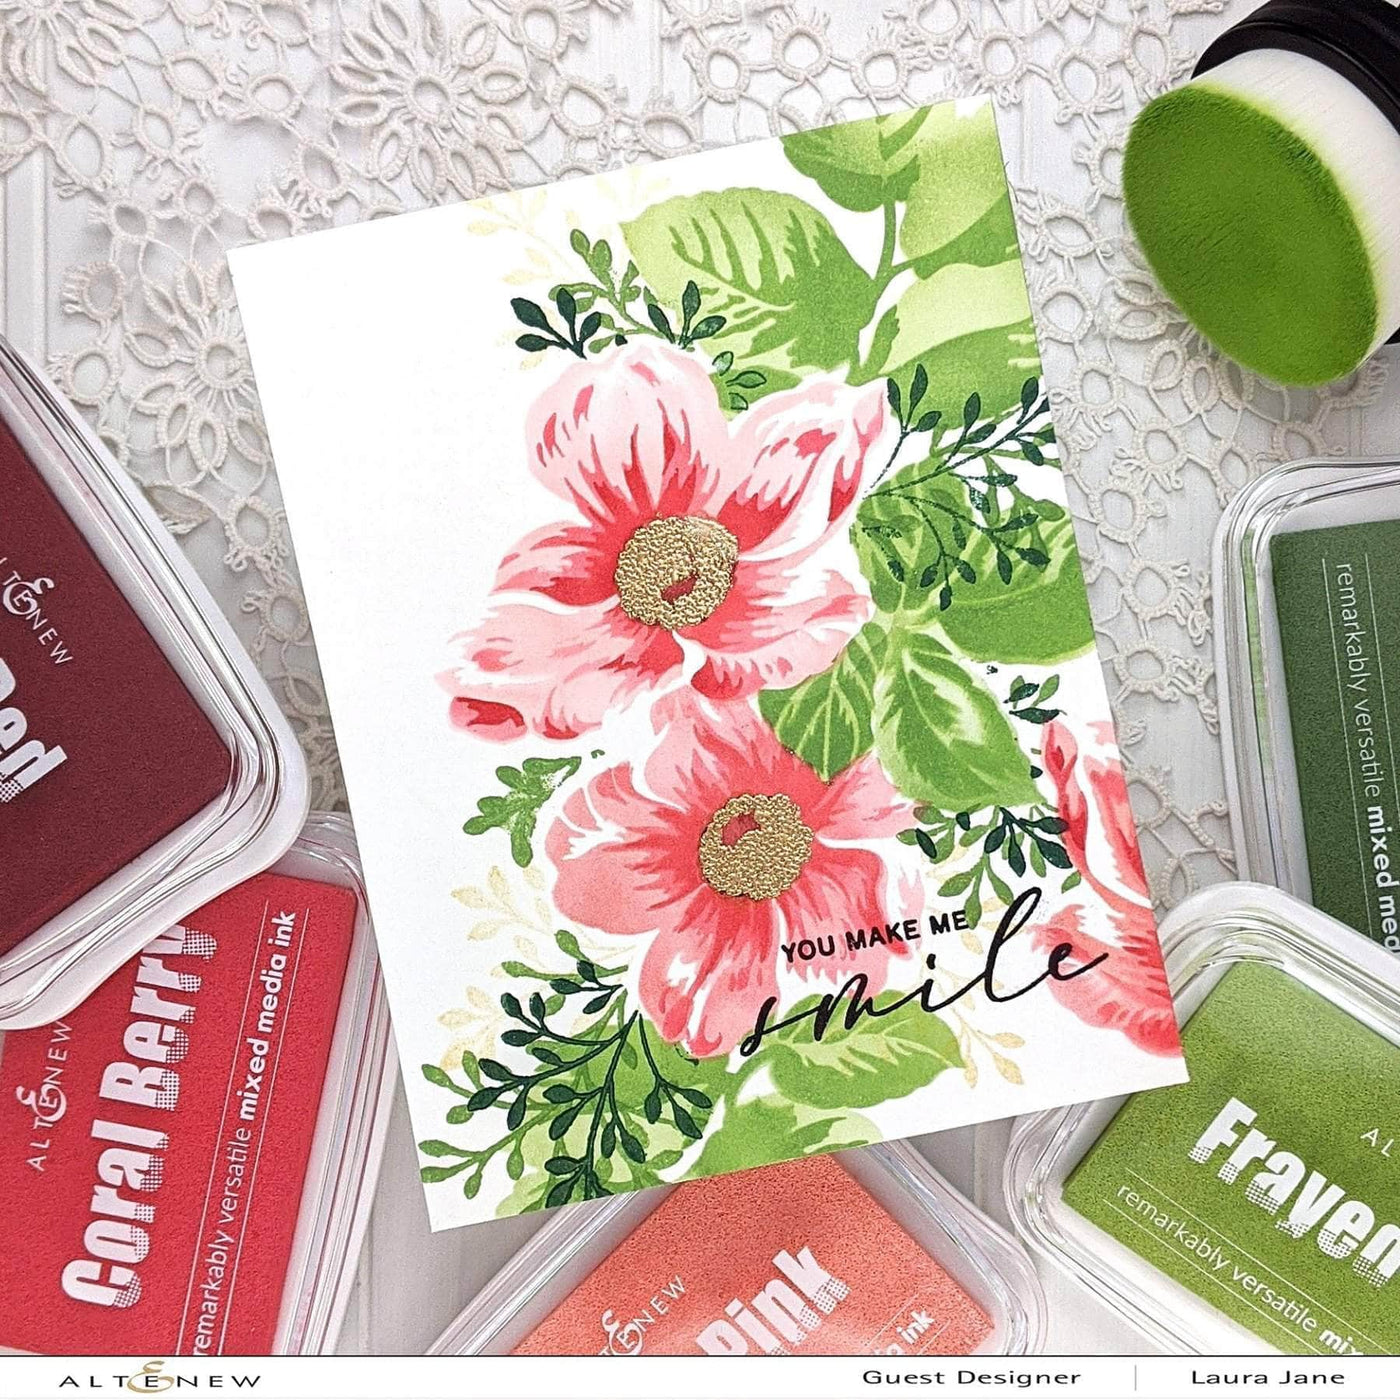 Altenew Creativity Kit Bundle Beautiful Motifs Creativity Cardmaking Kit